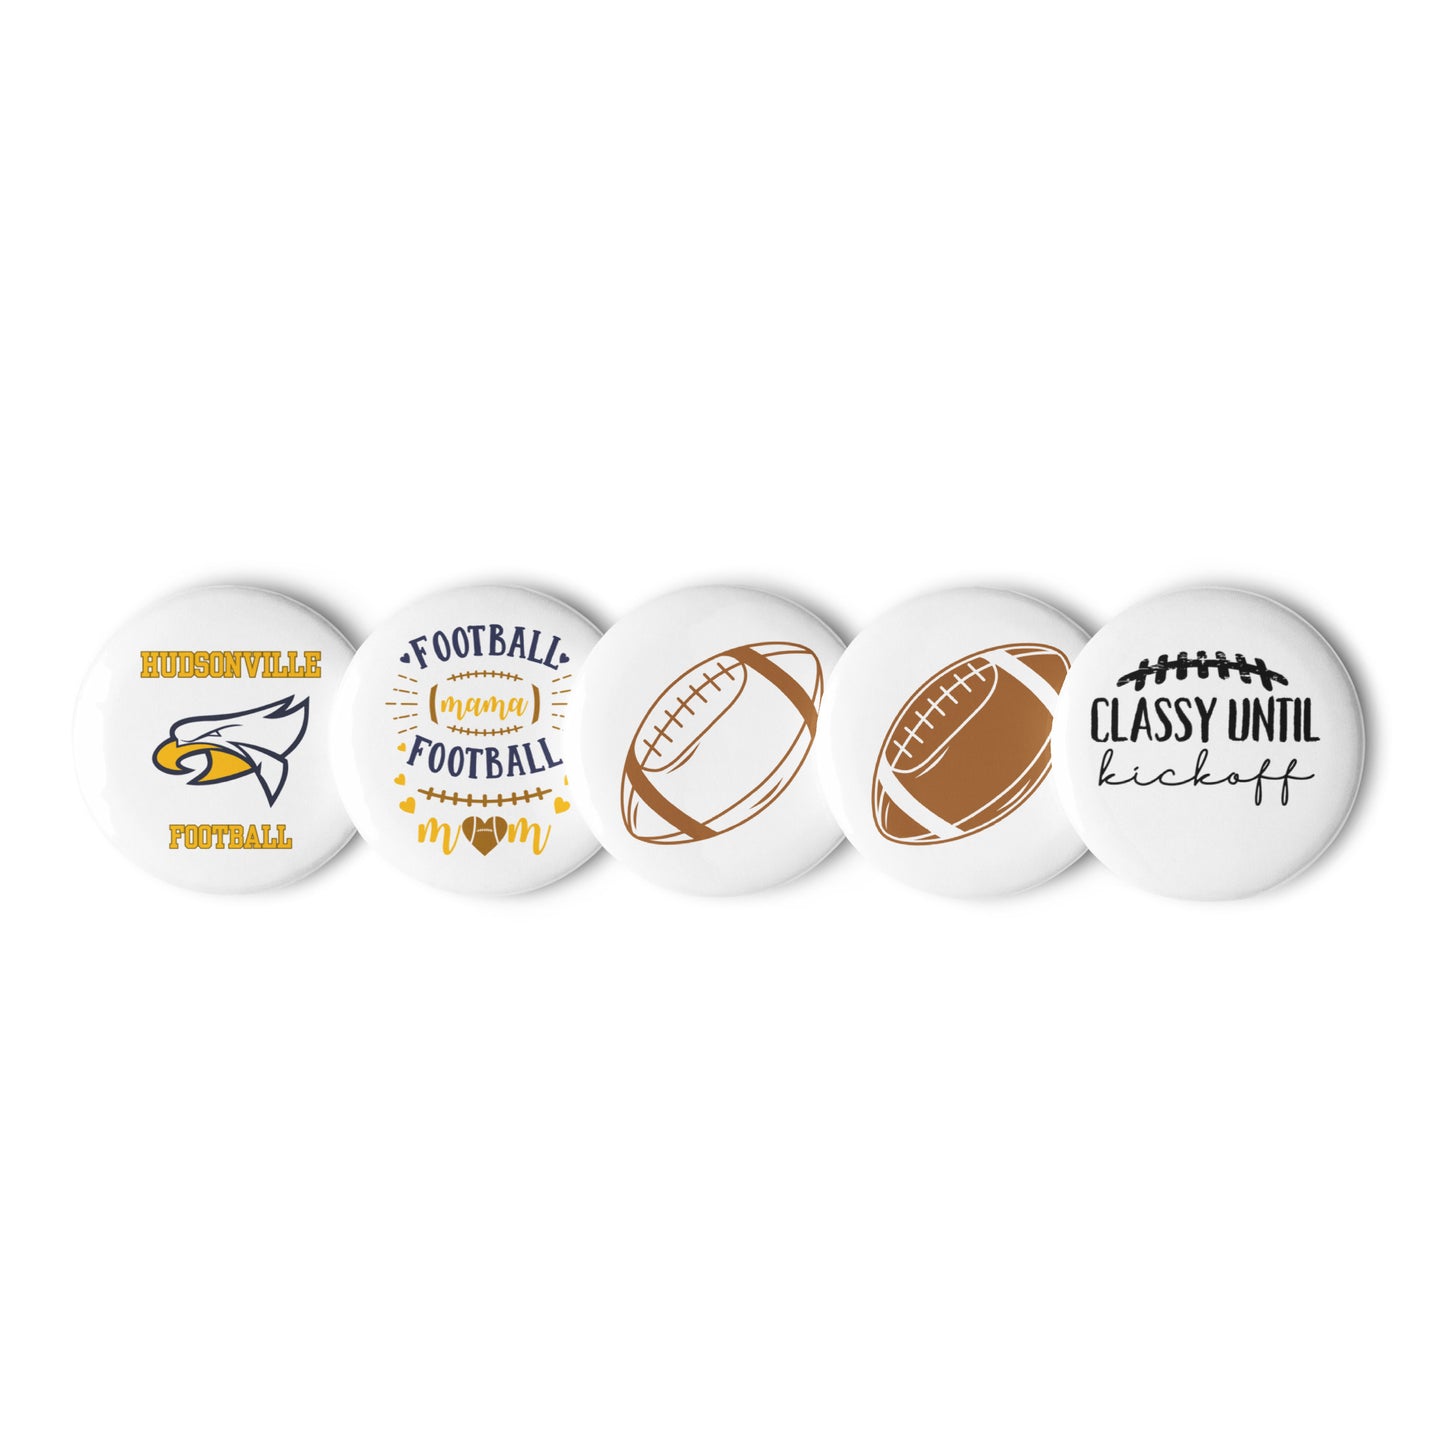 Hudsonville Football Set of pin buttons